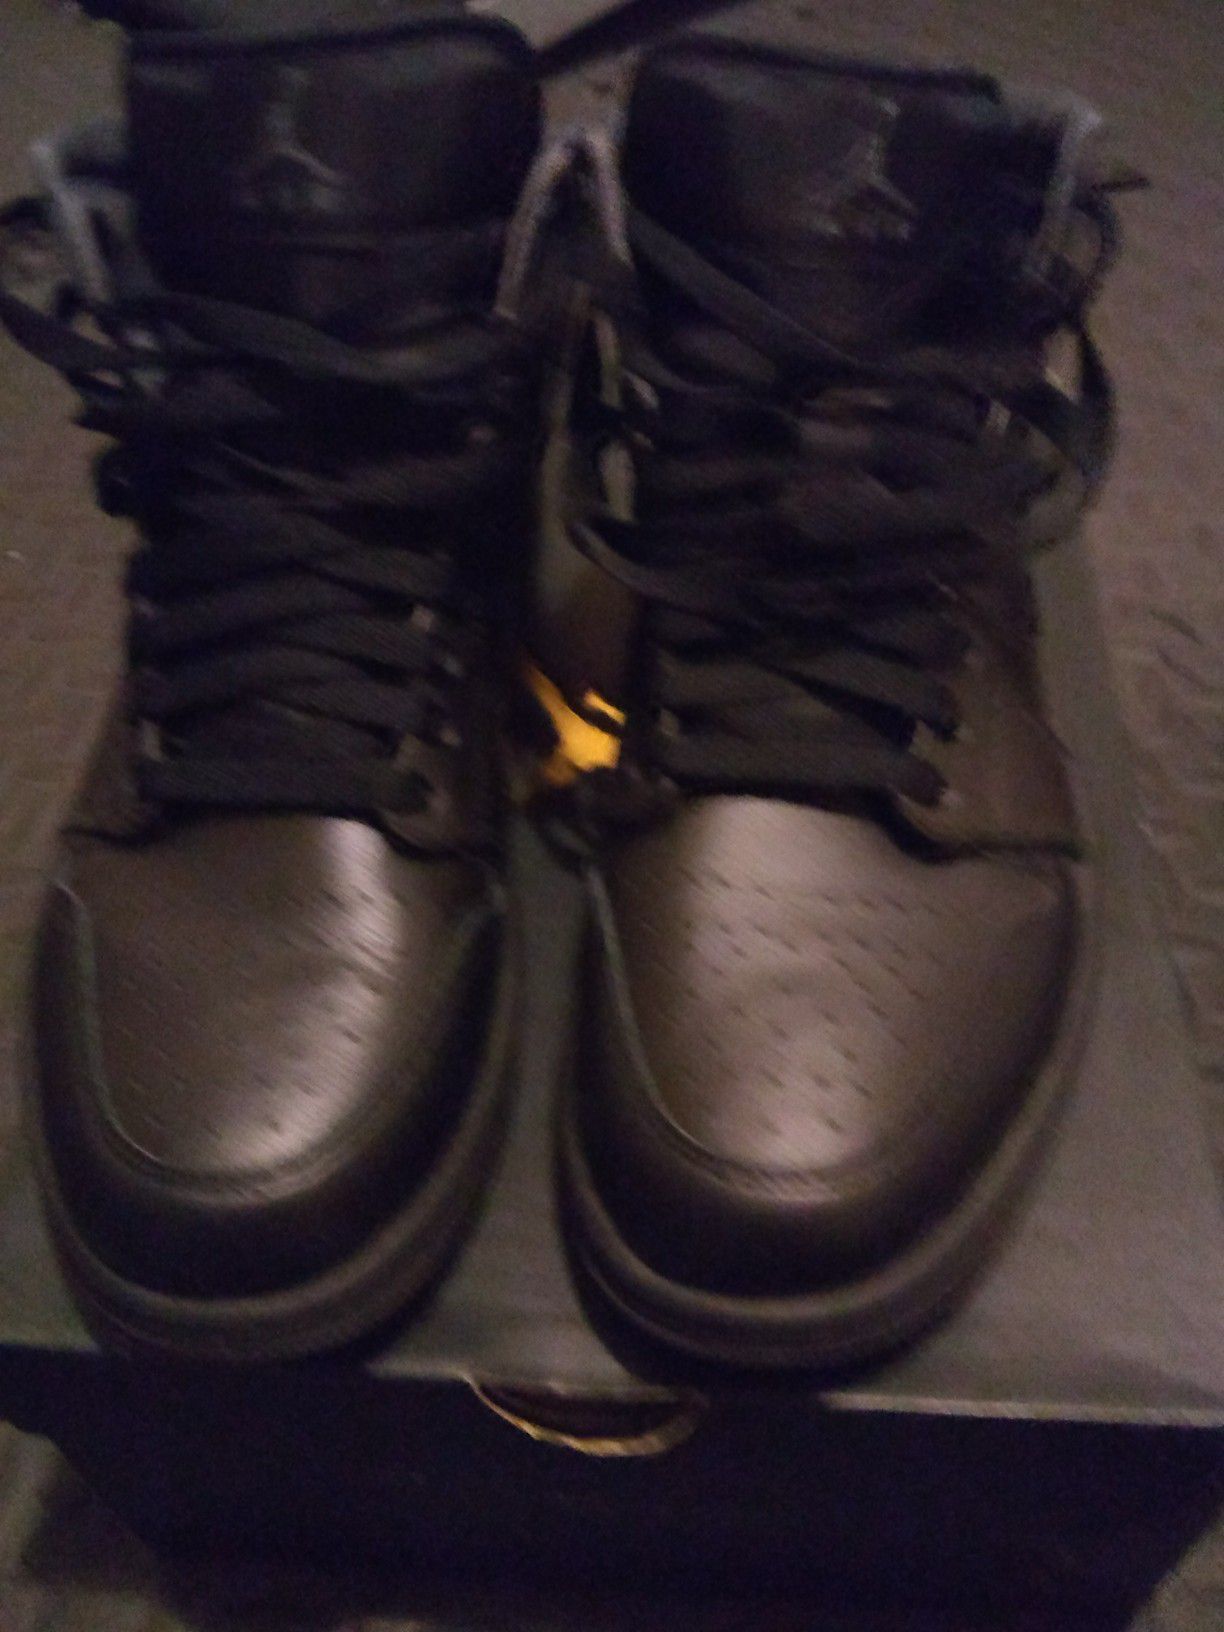 Black Jordan 1's (size 10 w/box)